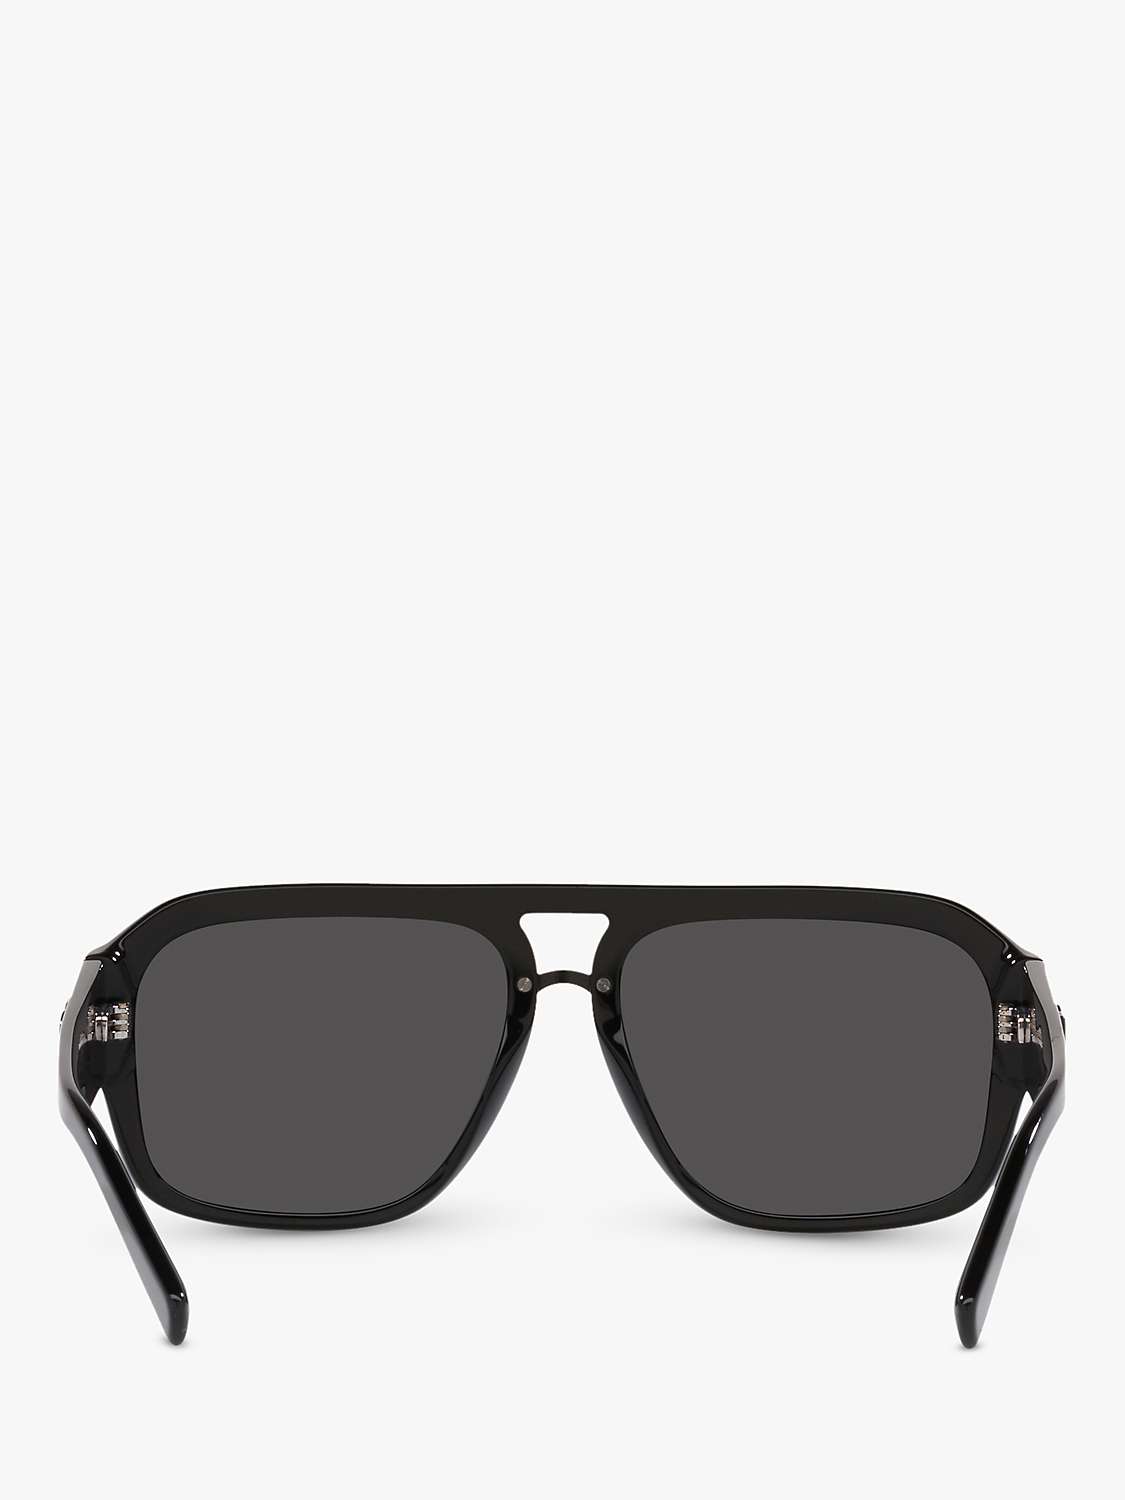 Dolce & Gabbana DG4403 Men's Aviator Sunglasses, Black/Grey at John ...